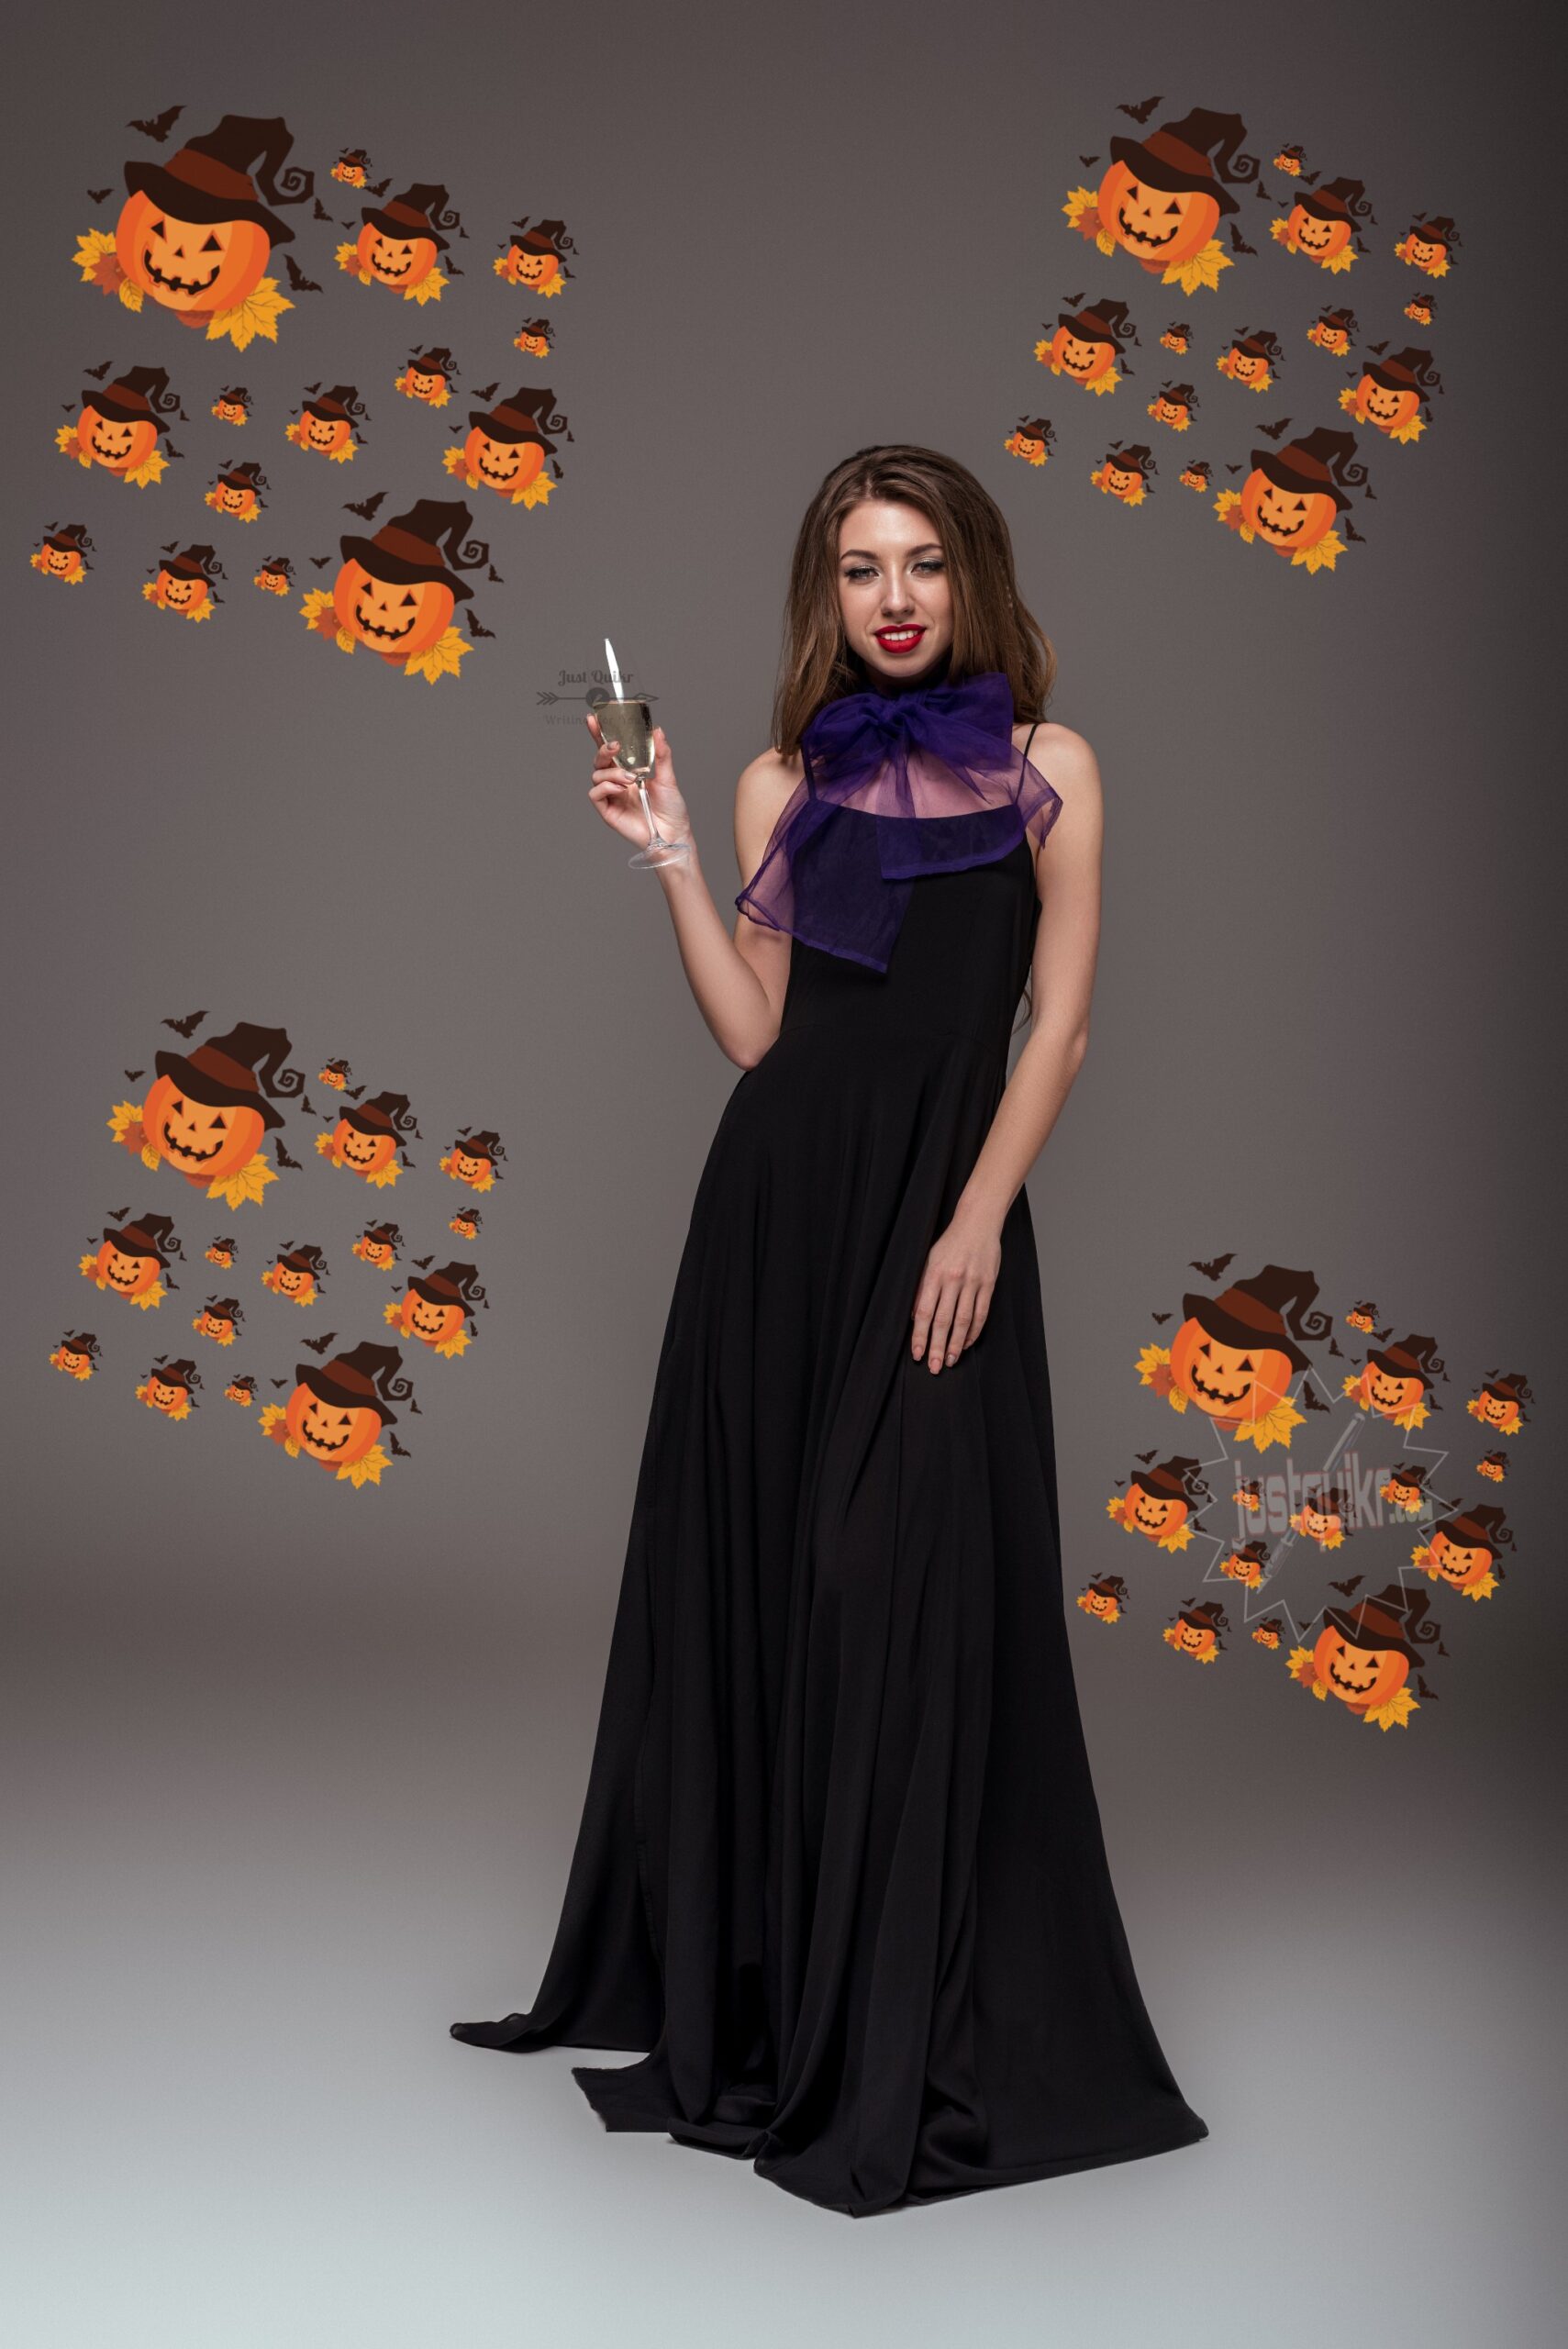 Halloween Day Dress Ideas for Long Black Dress 